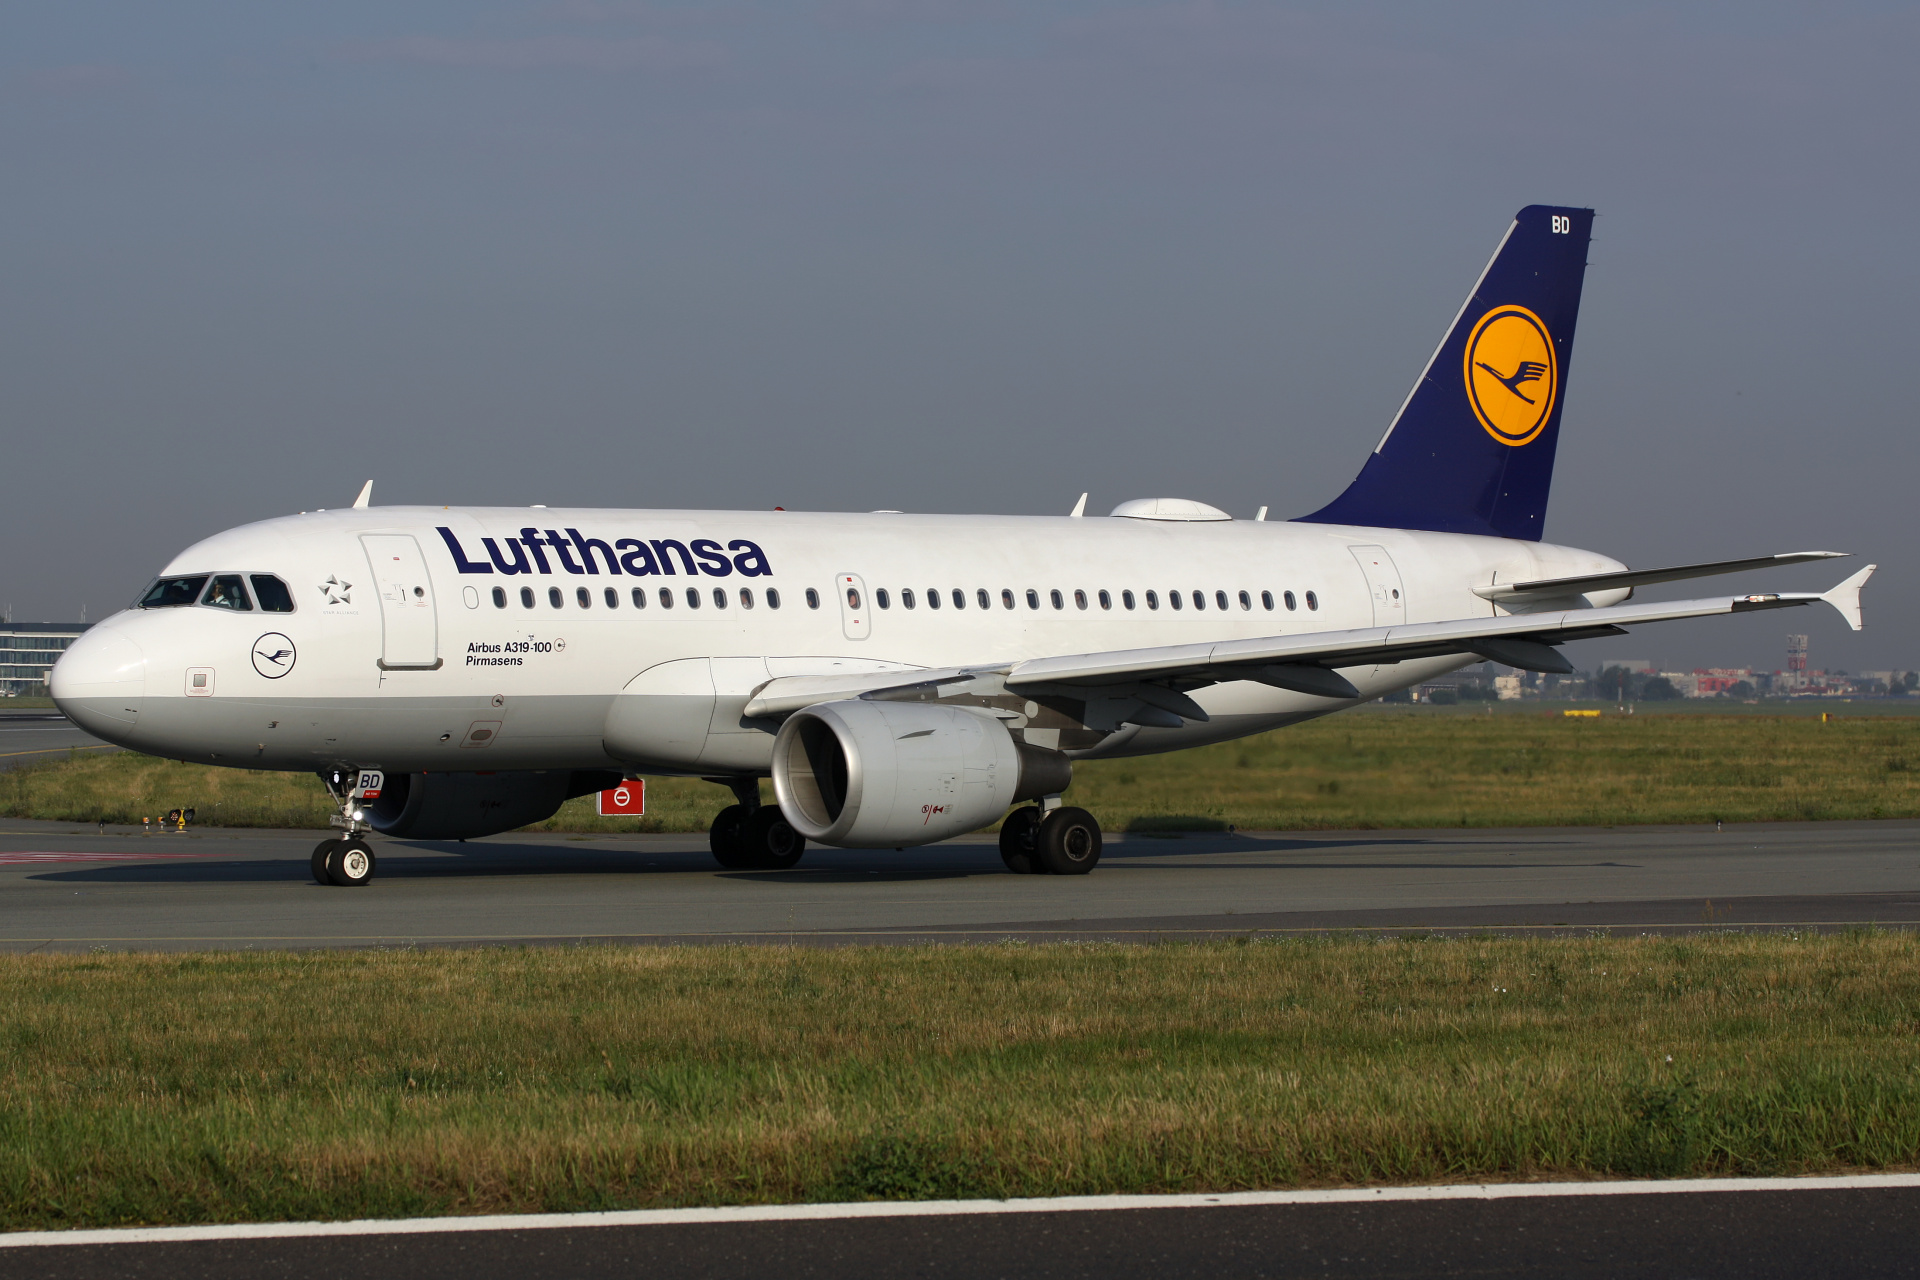 D-AIBD (Aircraft » EPWA Spotting » Airbus A319-100 » Lufthansa)